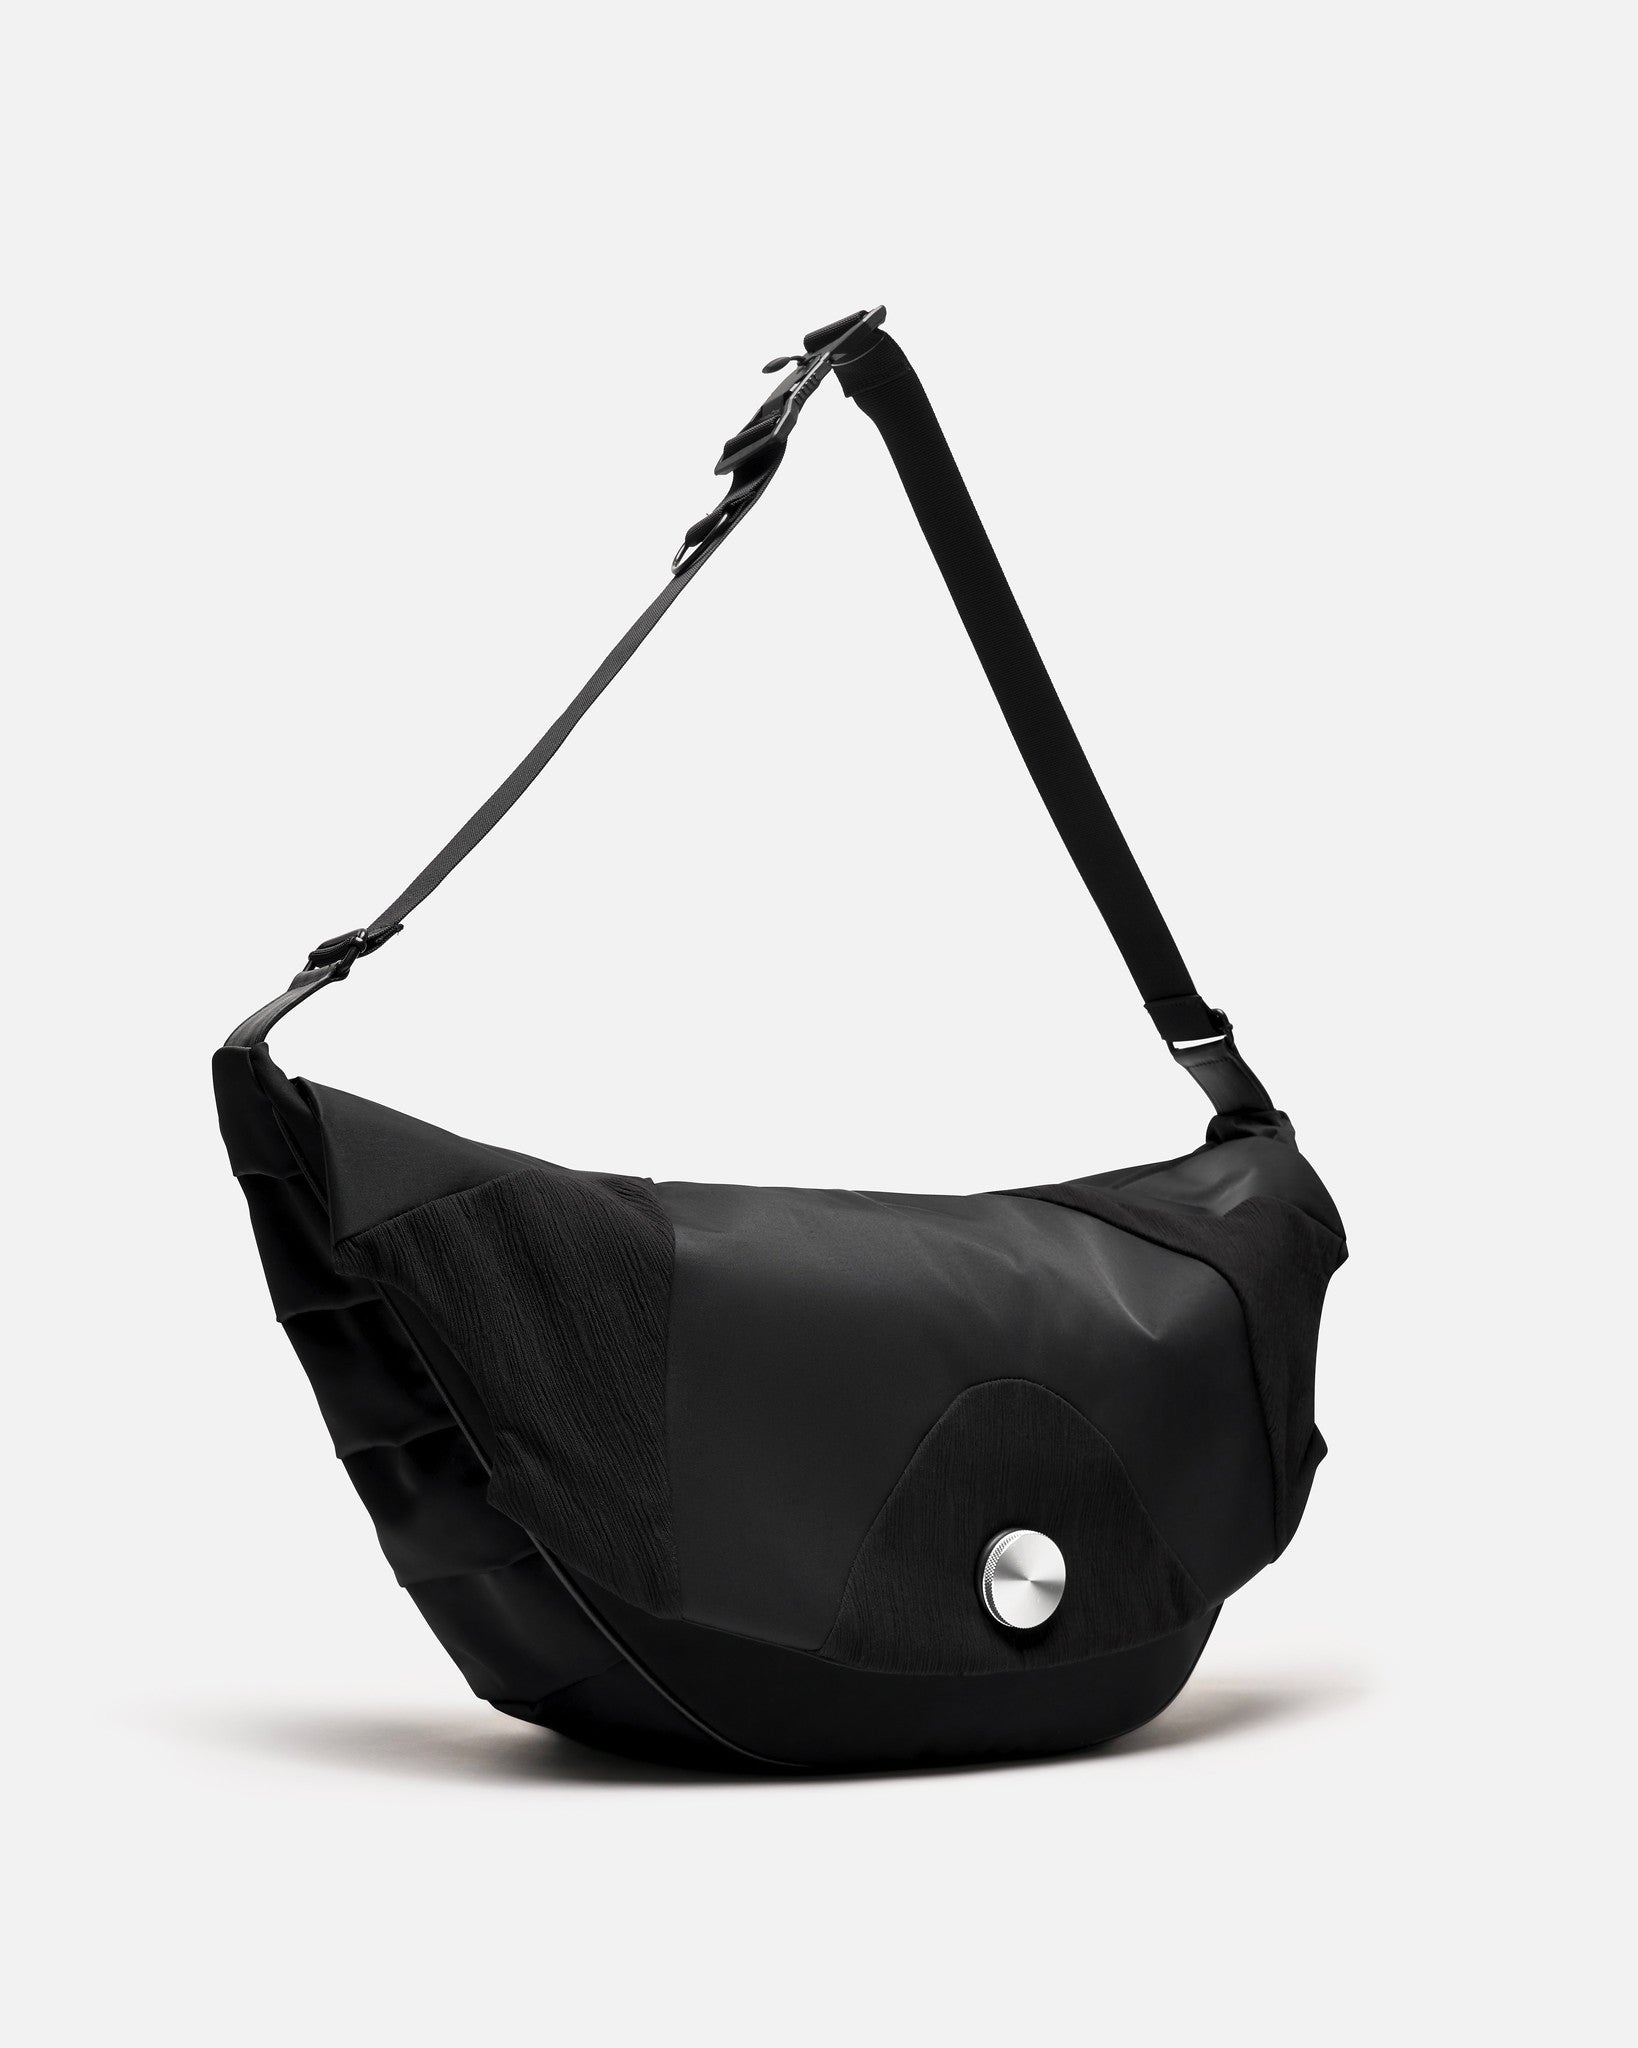 CMMAWEAR Men's Bags OS Crescent Bag in Black